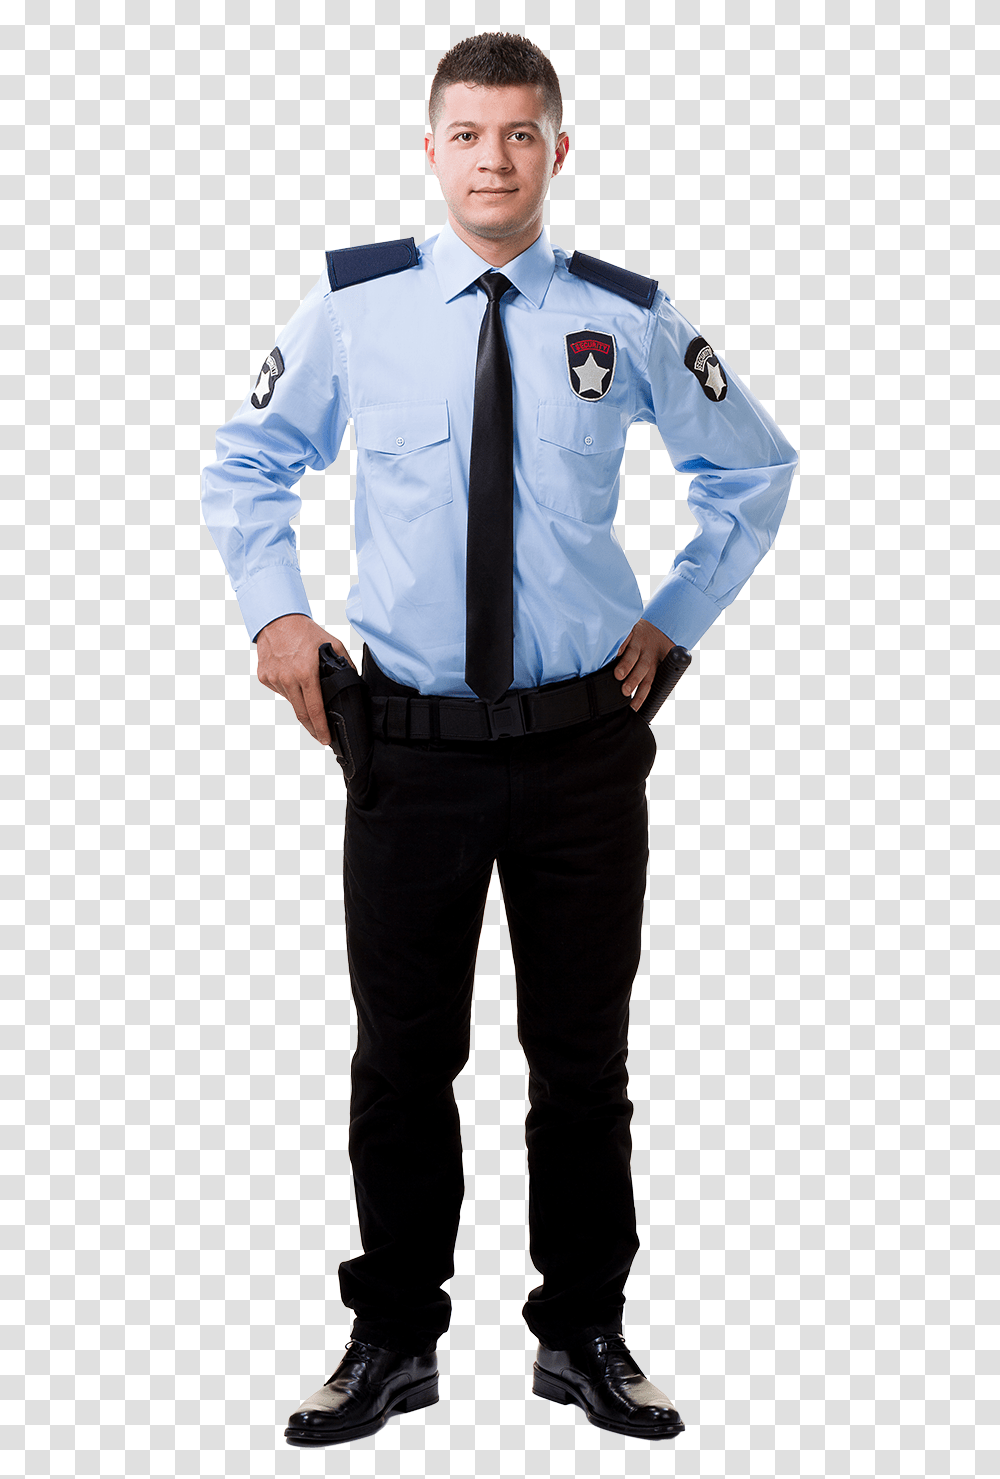 Police Officer Security Guard Uniform Security Guard Uniform, Apparel, Tie, Accessories Transparent Png